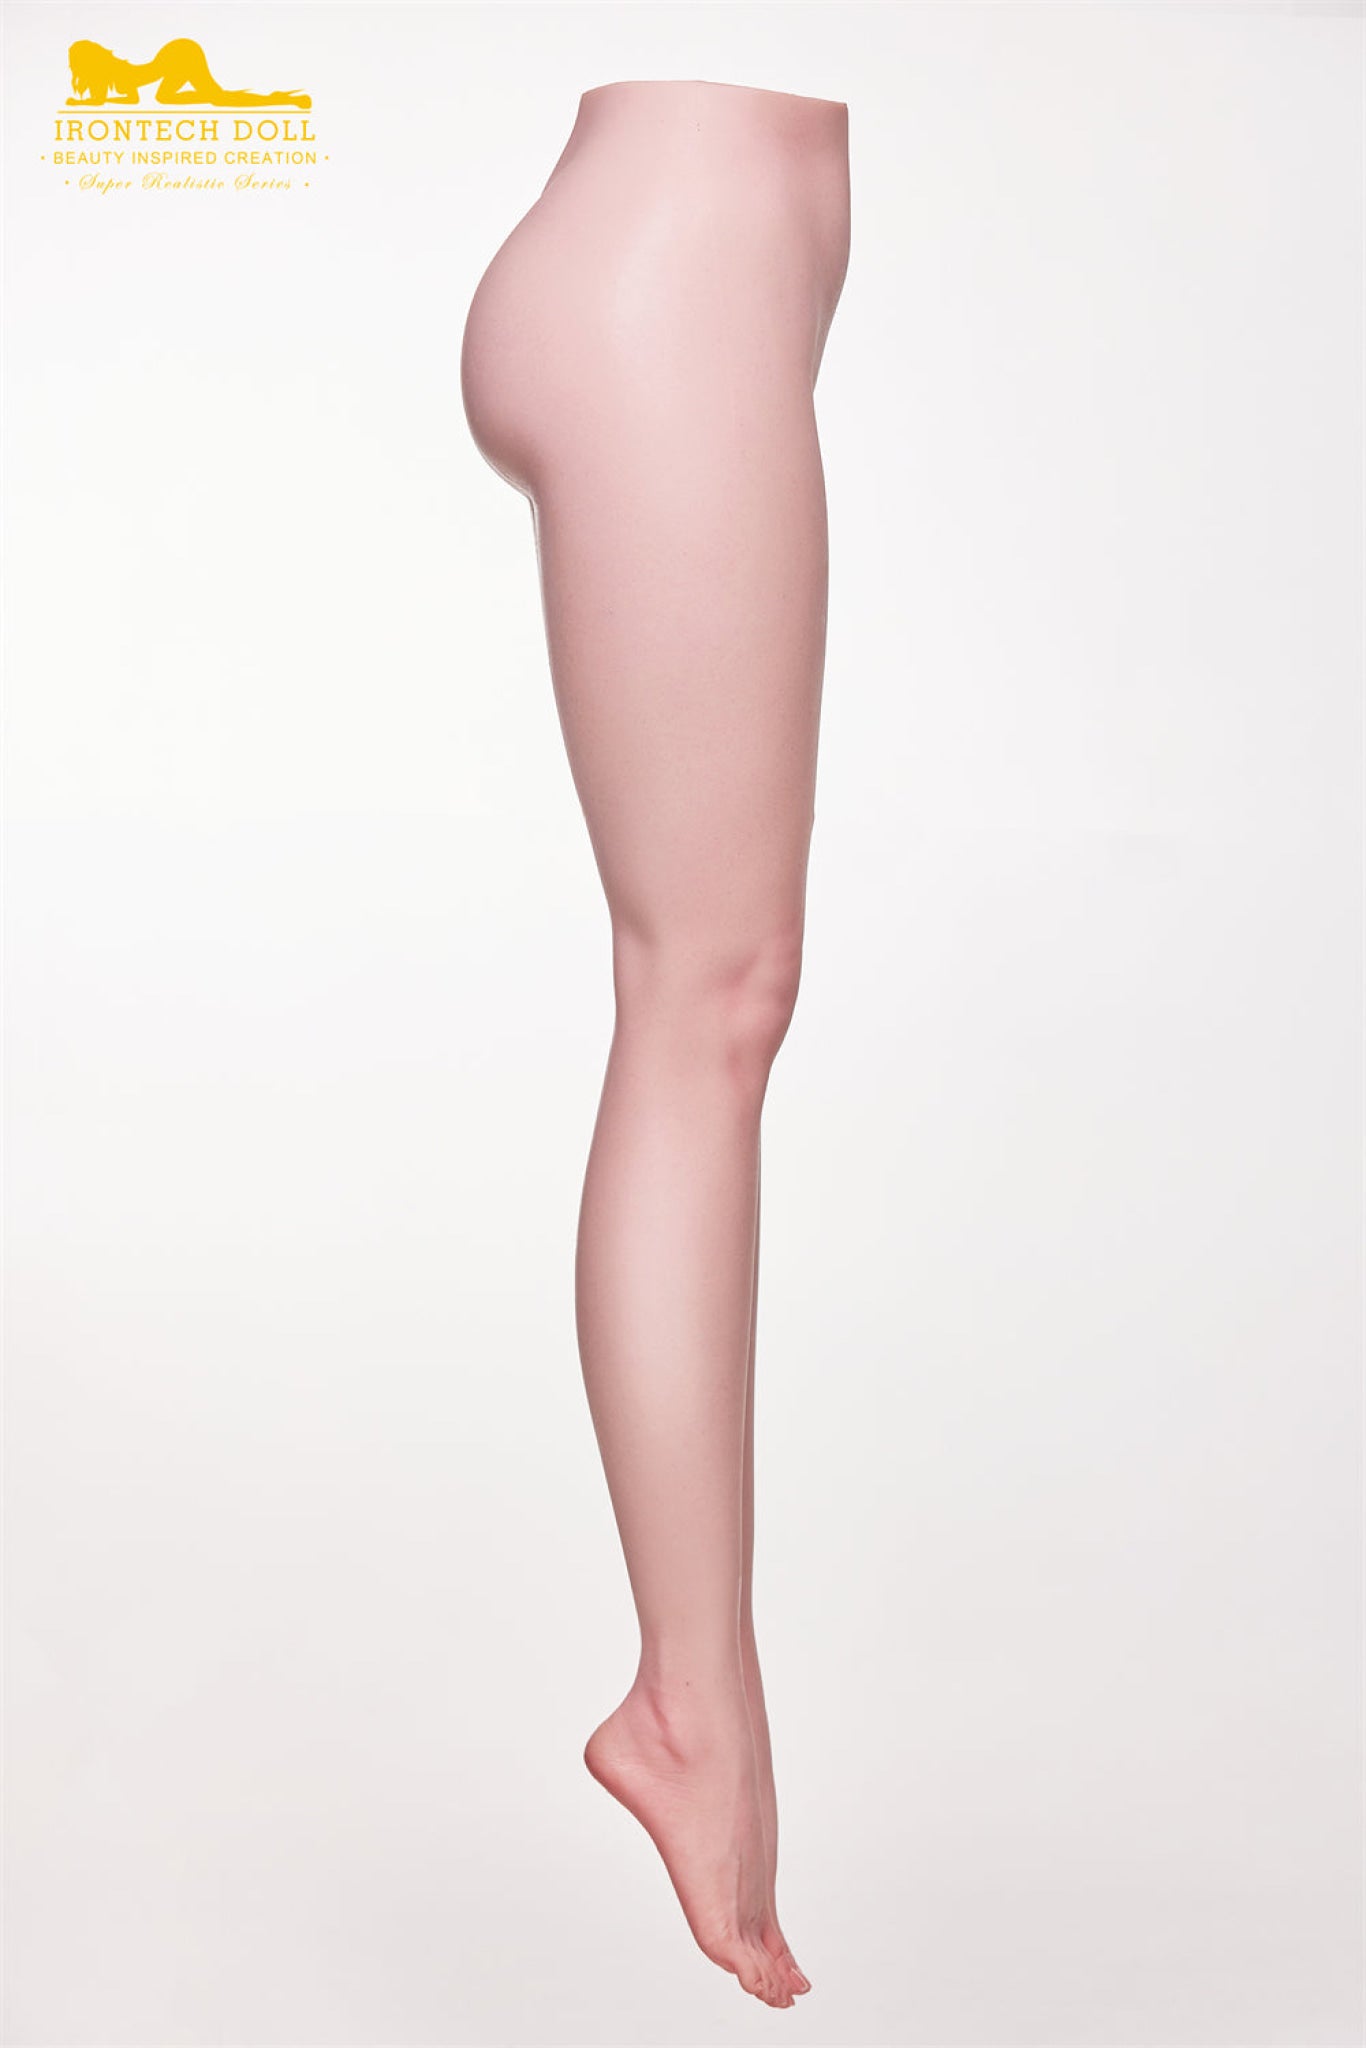 2'7" (83cm) Silicone Torso Legs - IronTech Doll® Iron Tech